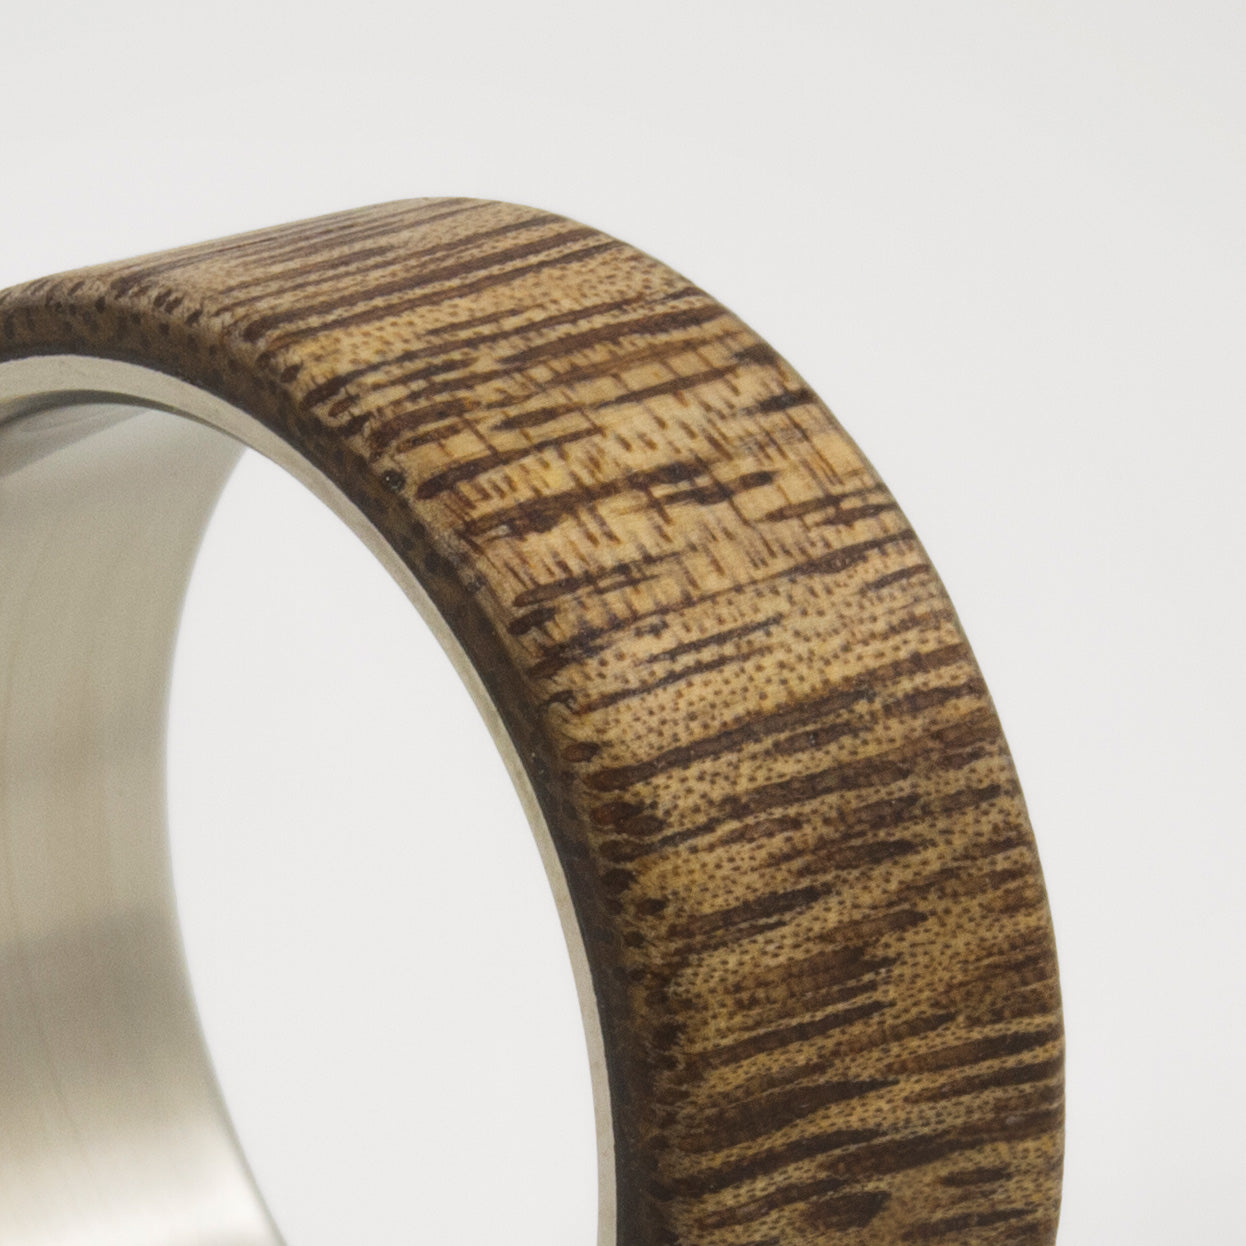 Viraro wood and titanium ring